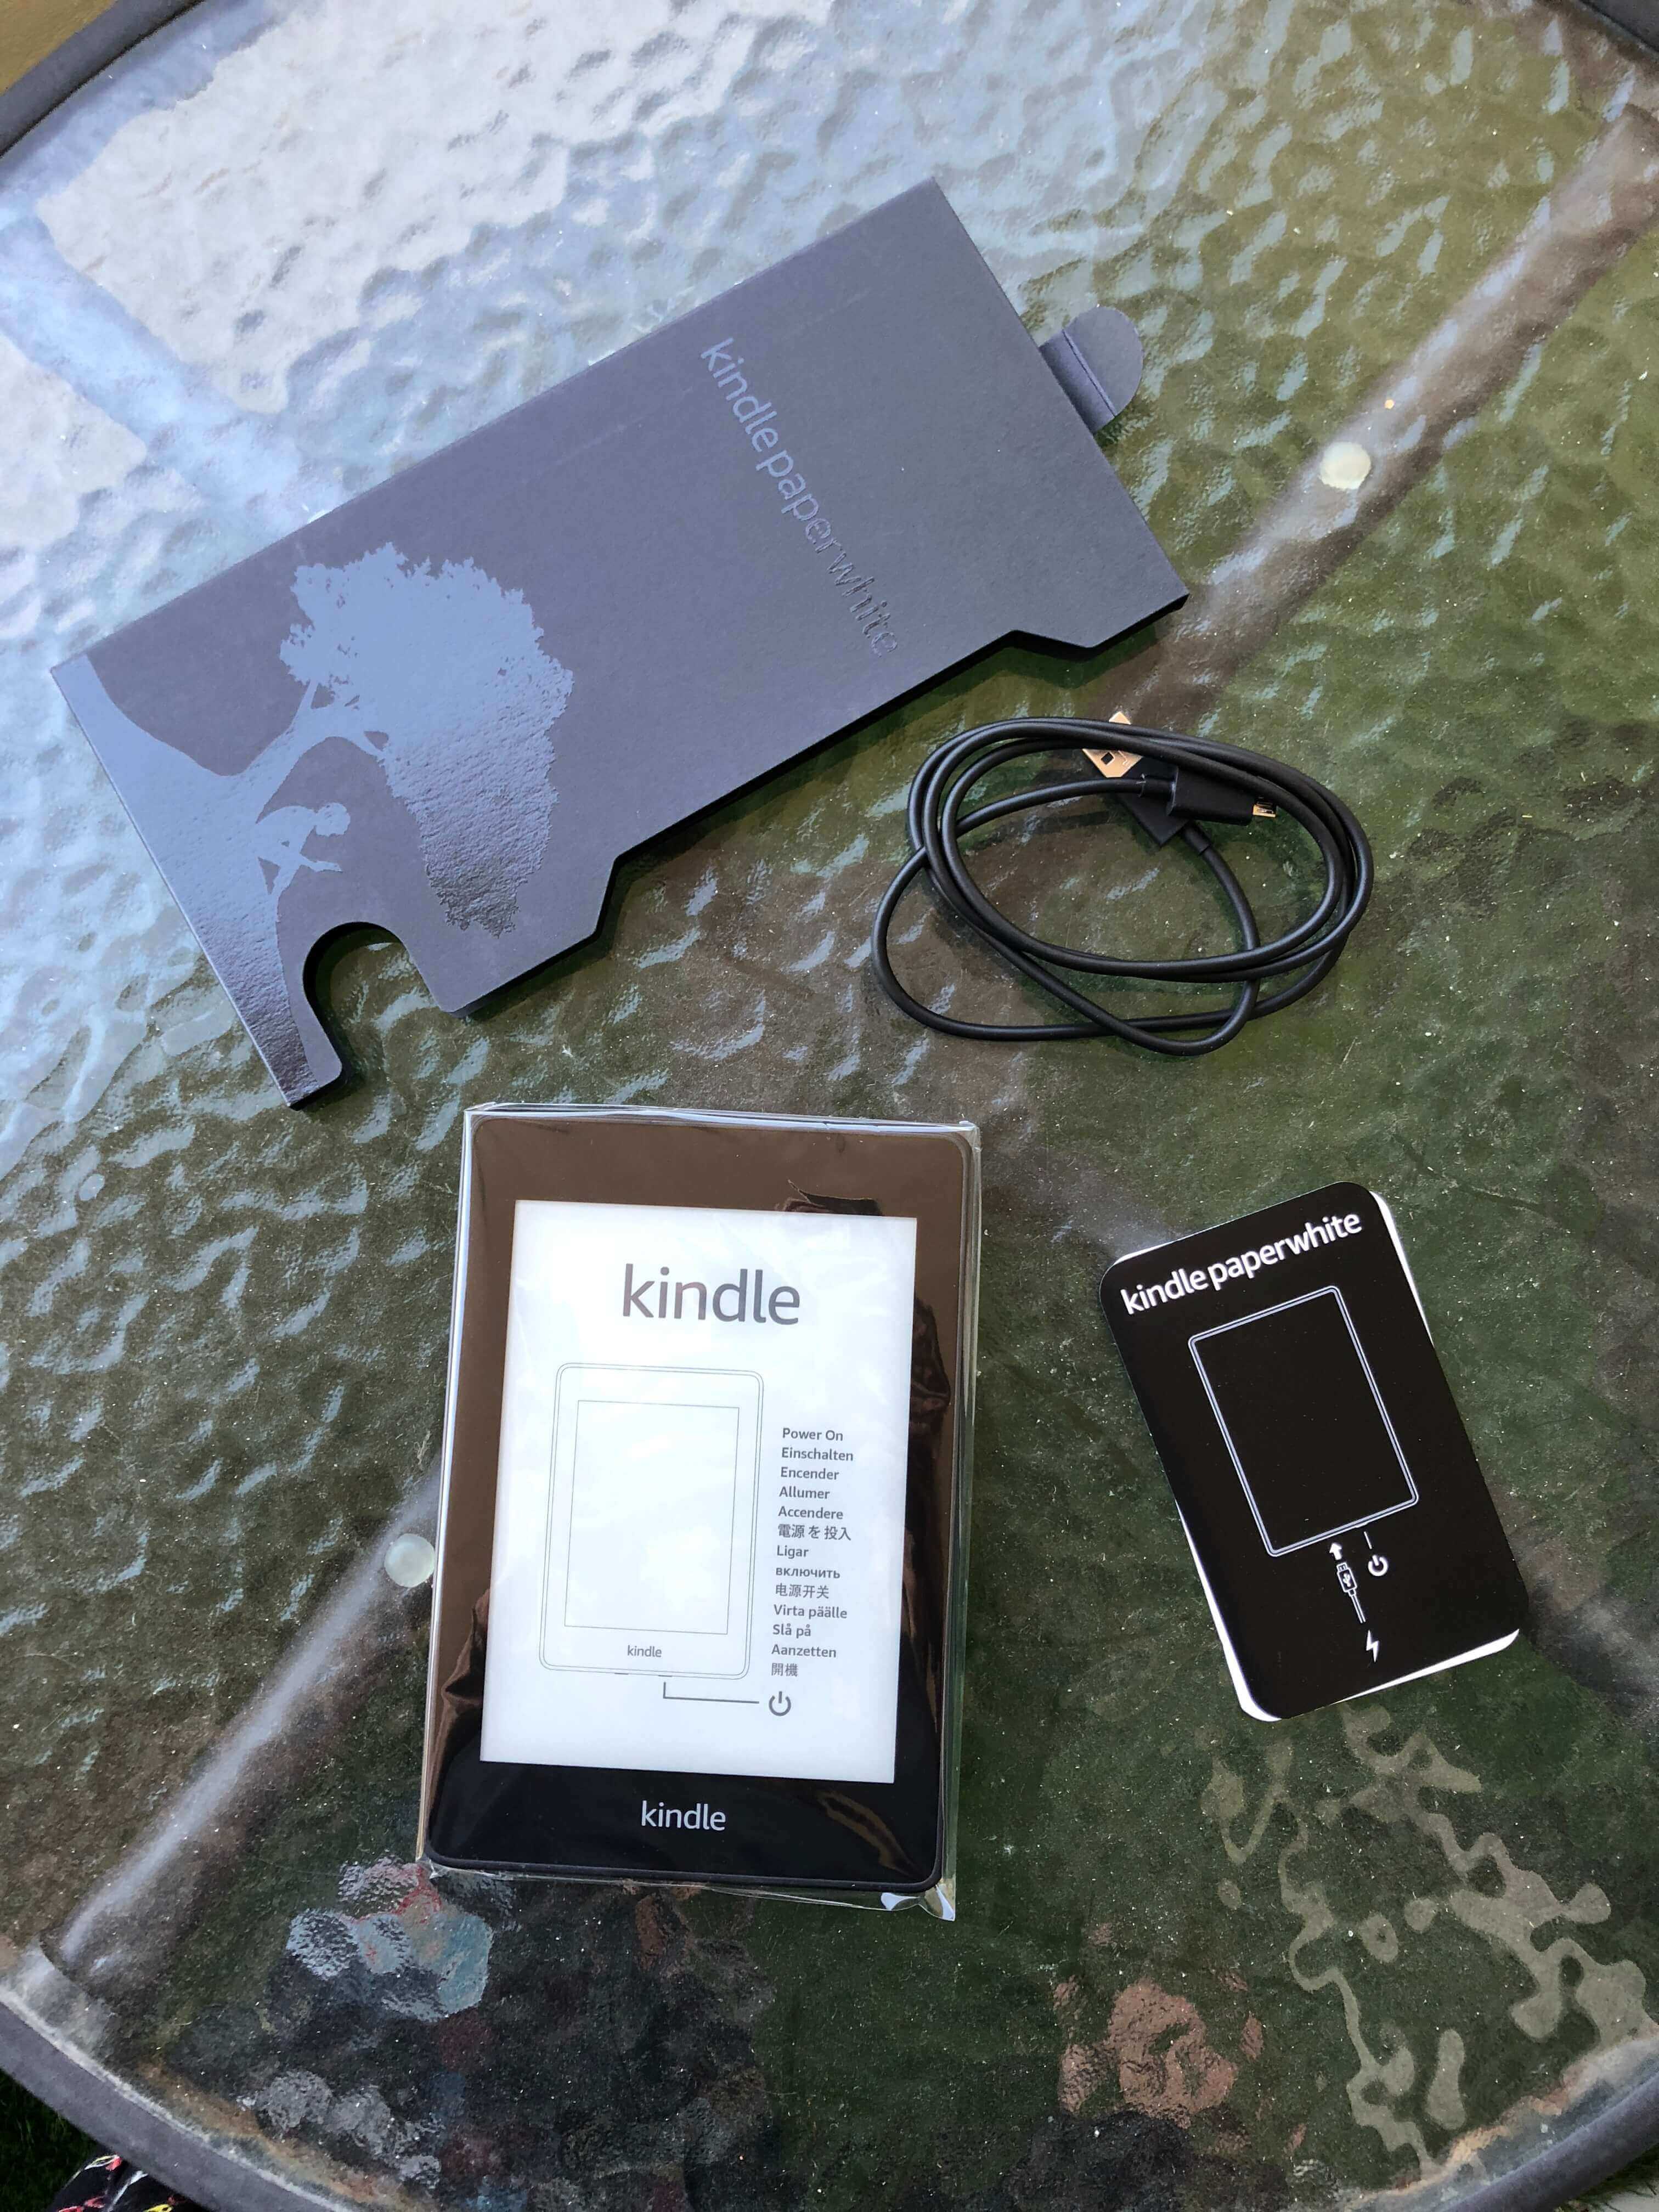 Kindle Keyboard 3 Voyage Kindle Touch Wi-Fi Oasis Kobo E-reader Kindle Lampe de lecture à pince flexible pour nouveau Kindle Music Stand Black Kindle Paperwhite 